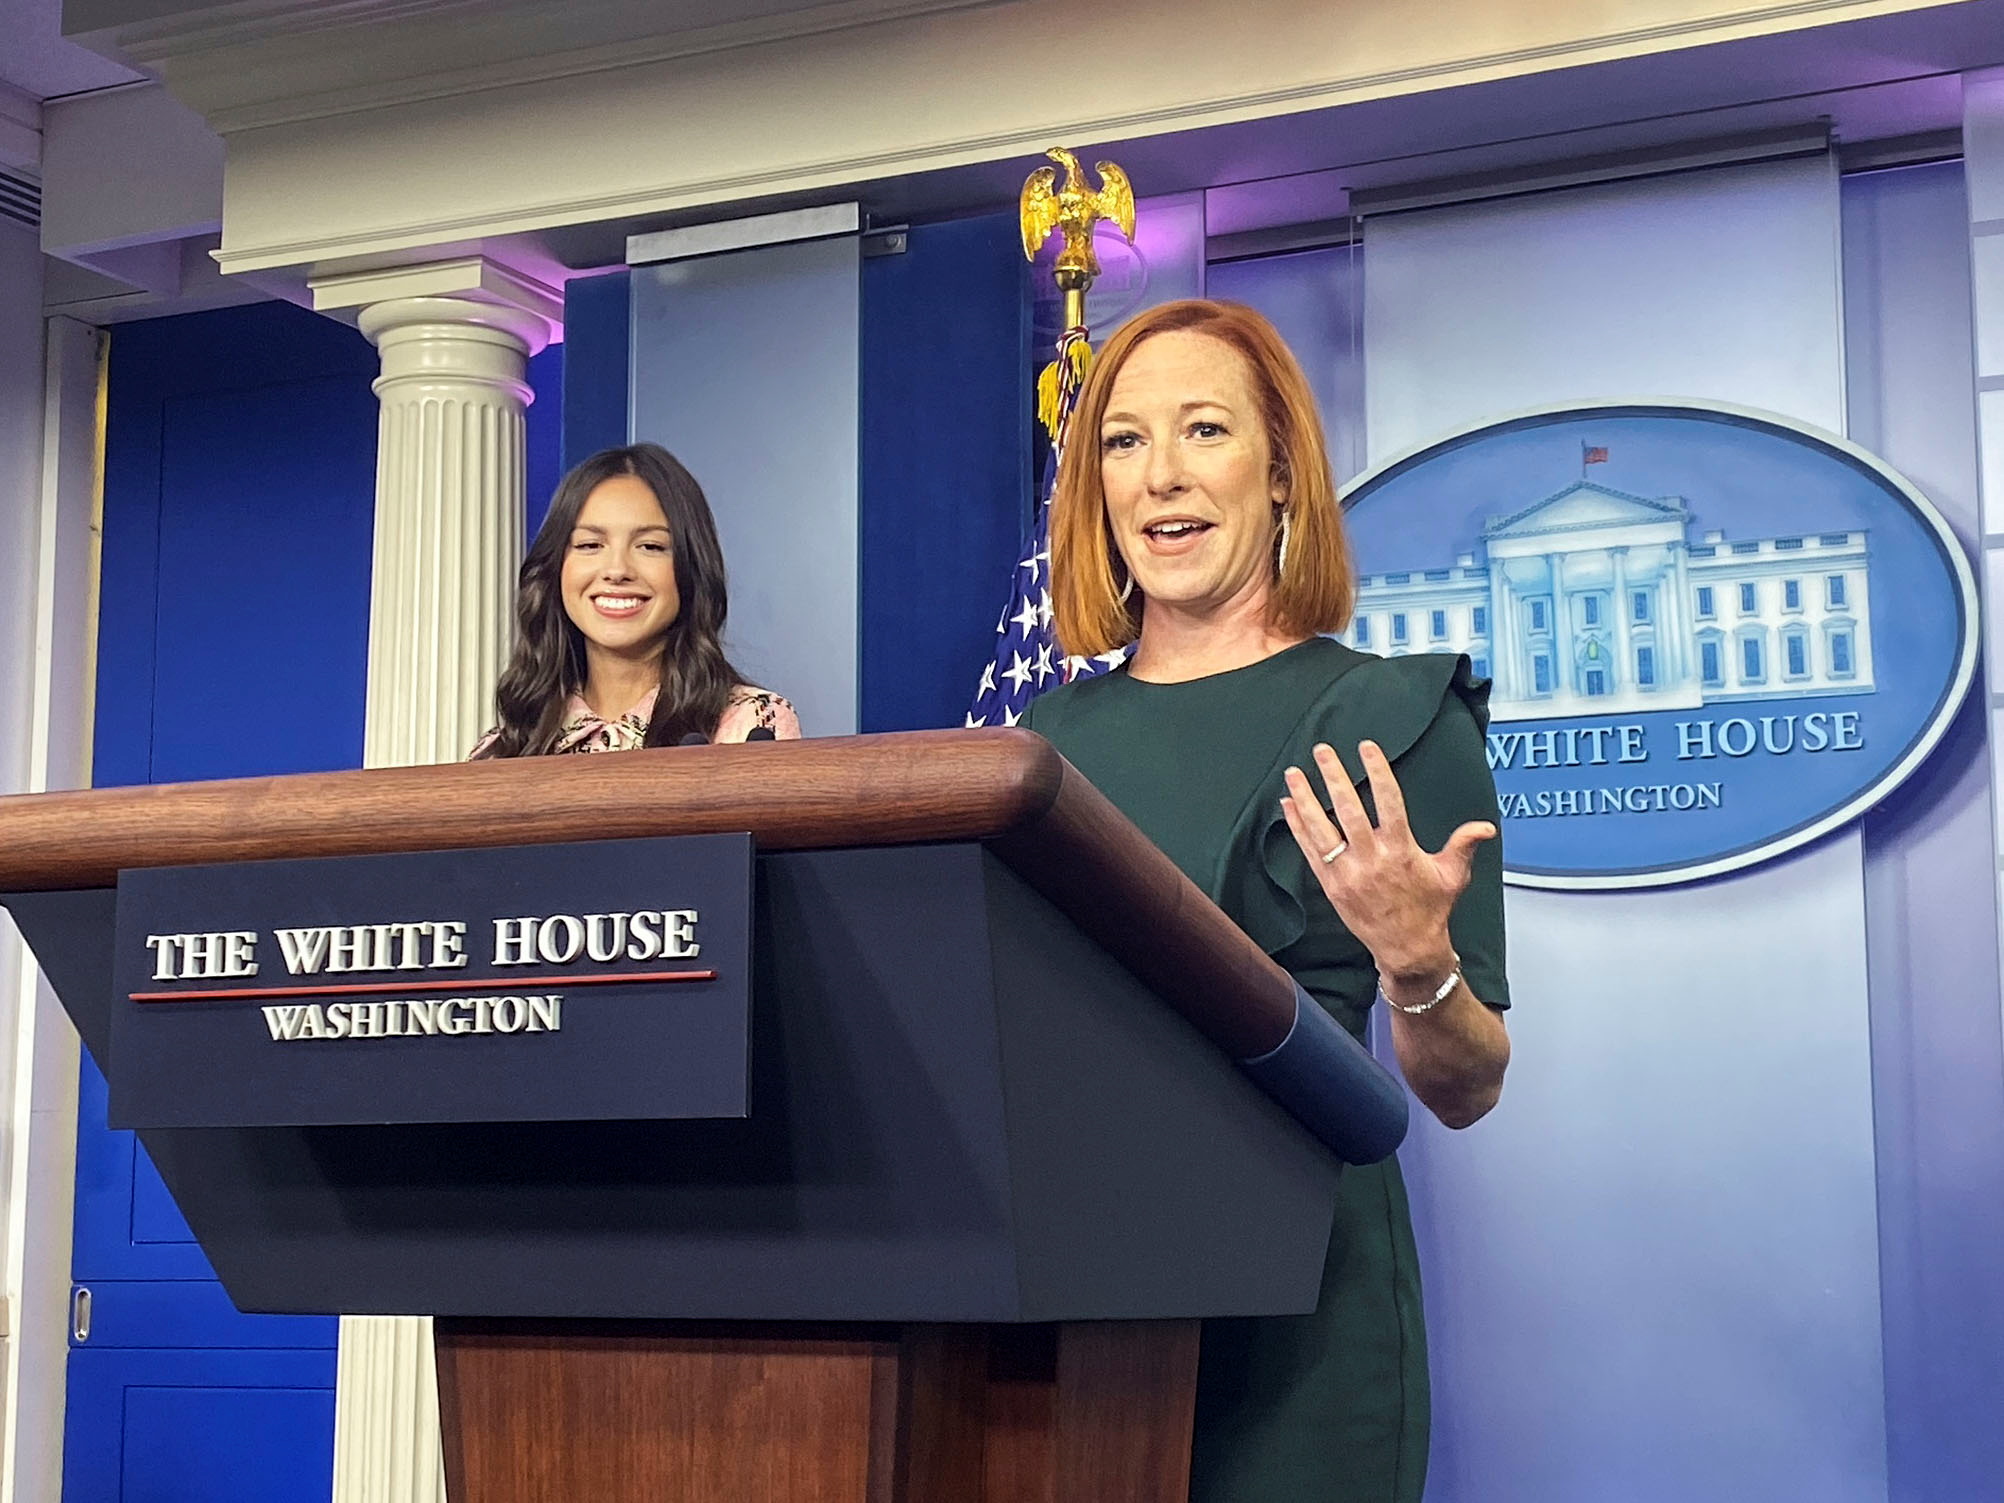 Singer and actress Olivia Rodrigo visits the White House in Washington